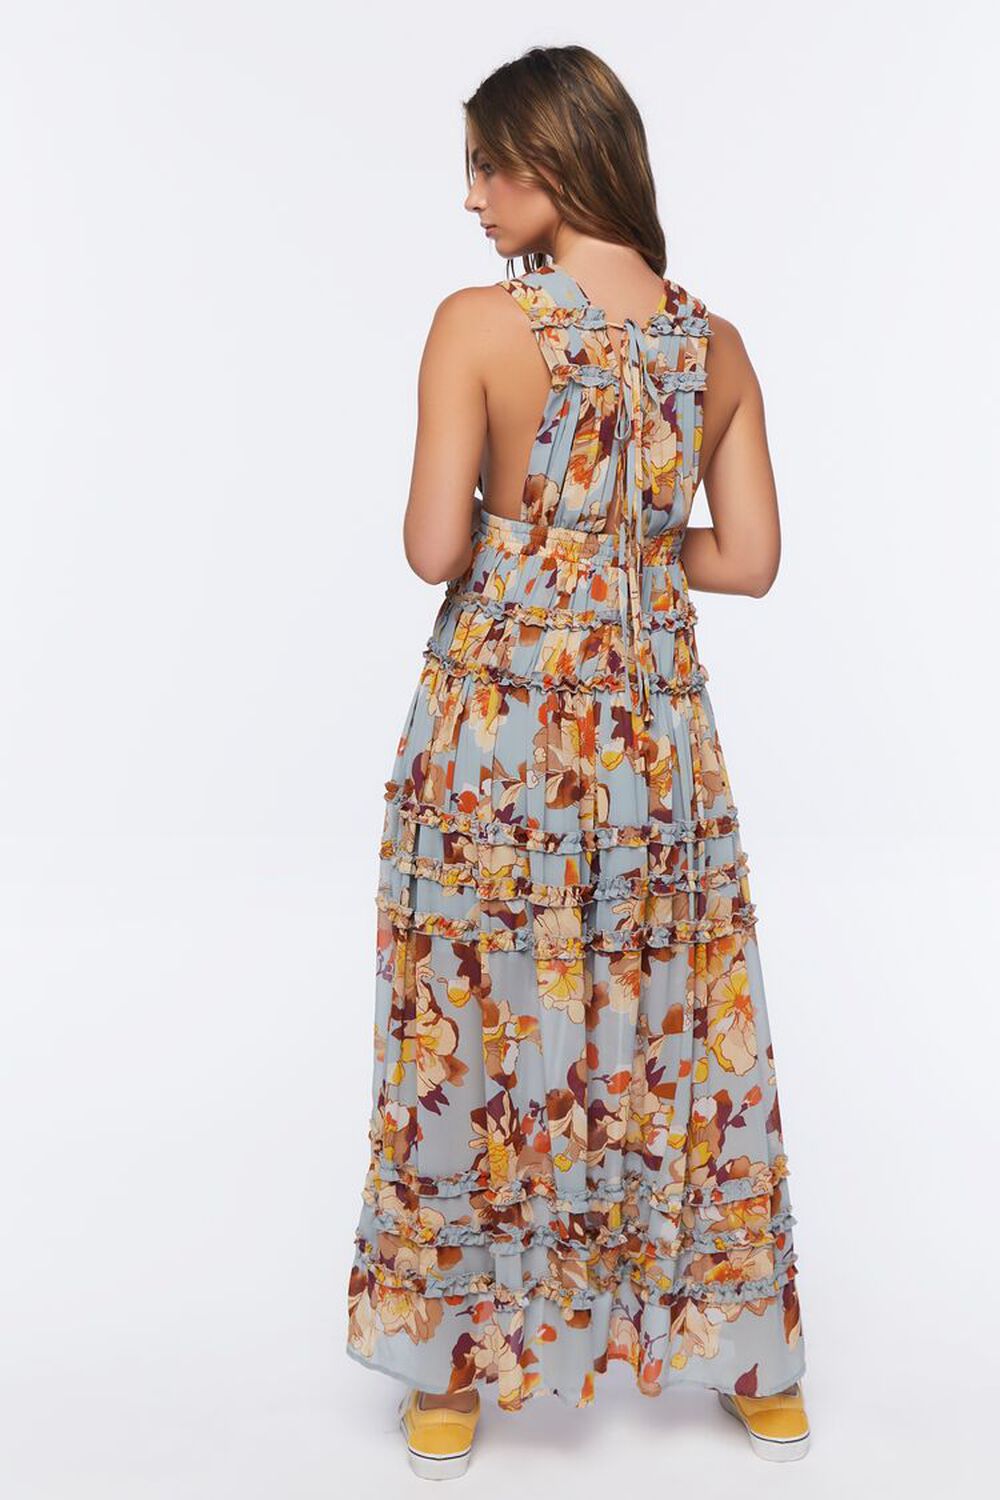 LIGHT BLUE/MULTI Floral Print Maxi Dress, image 3